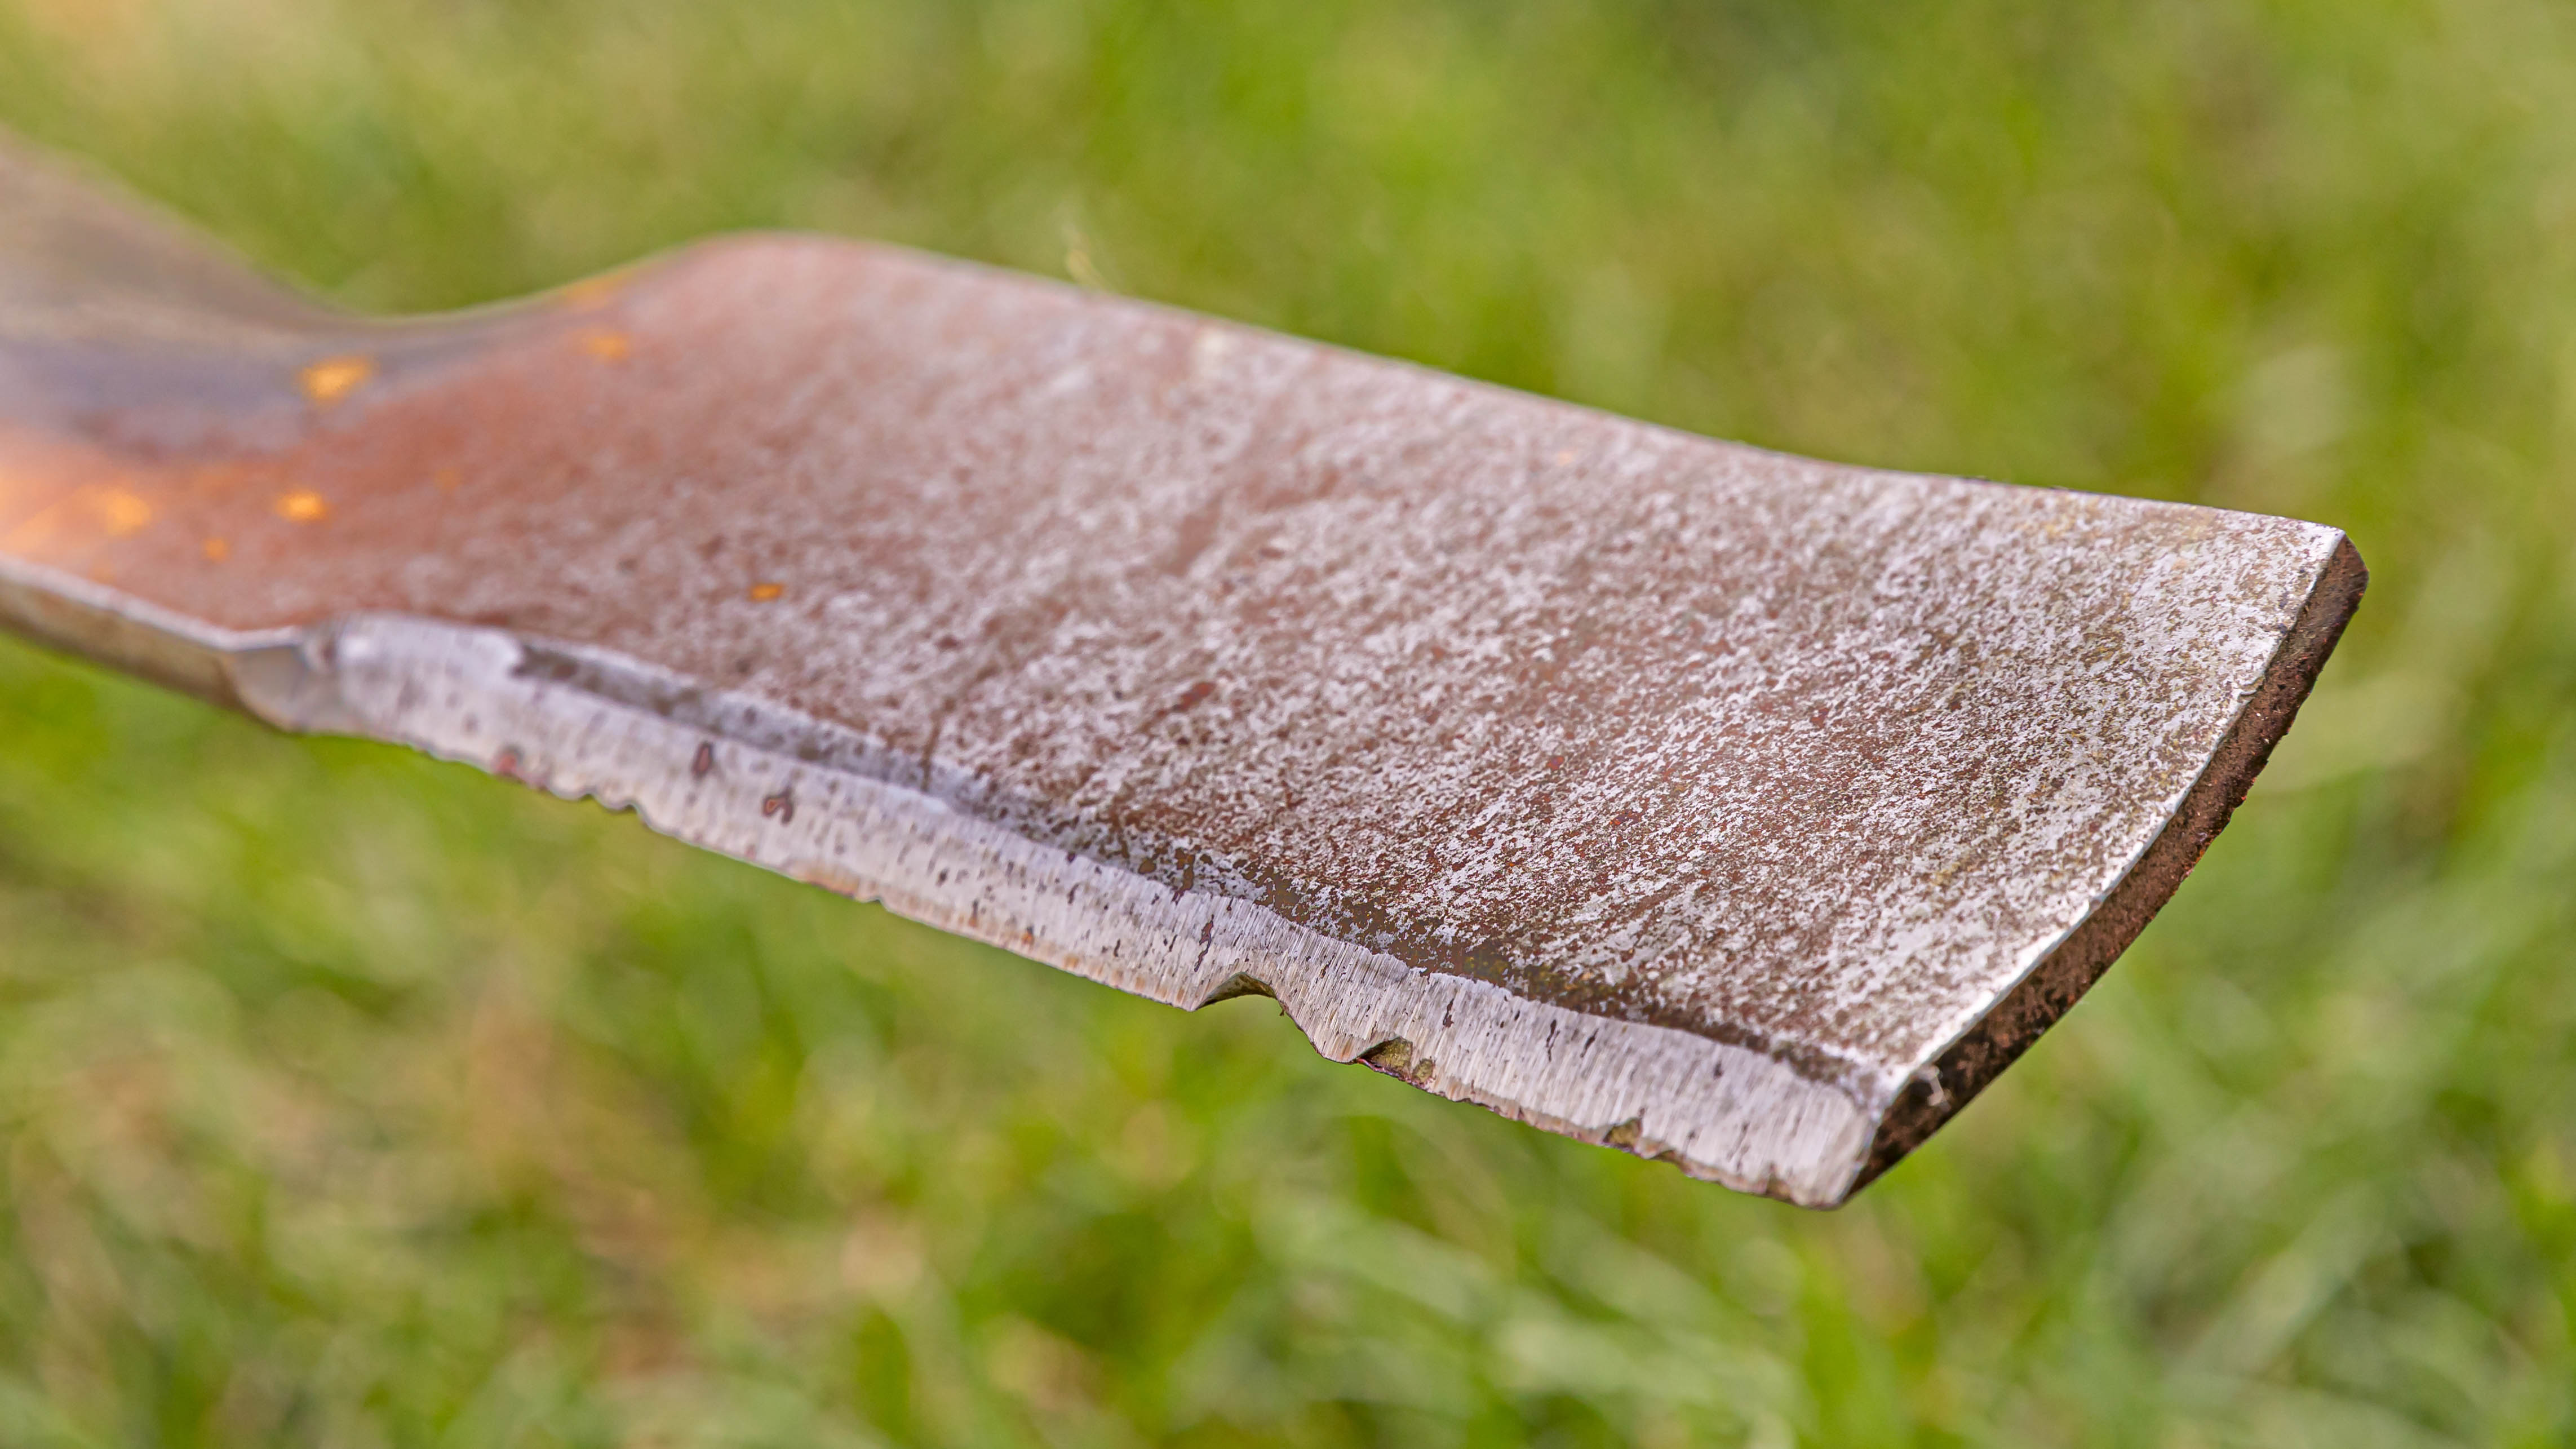 A damaged lawn mower blade